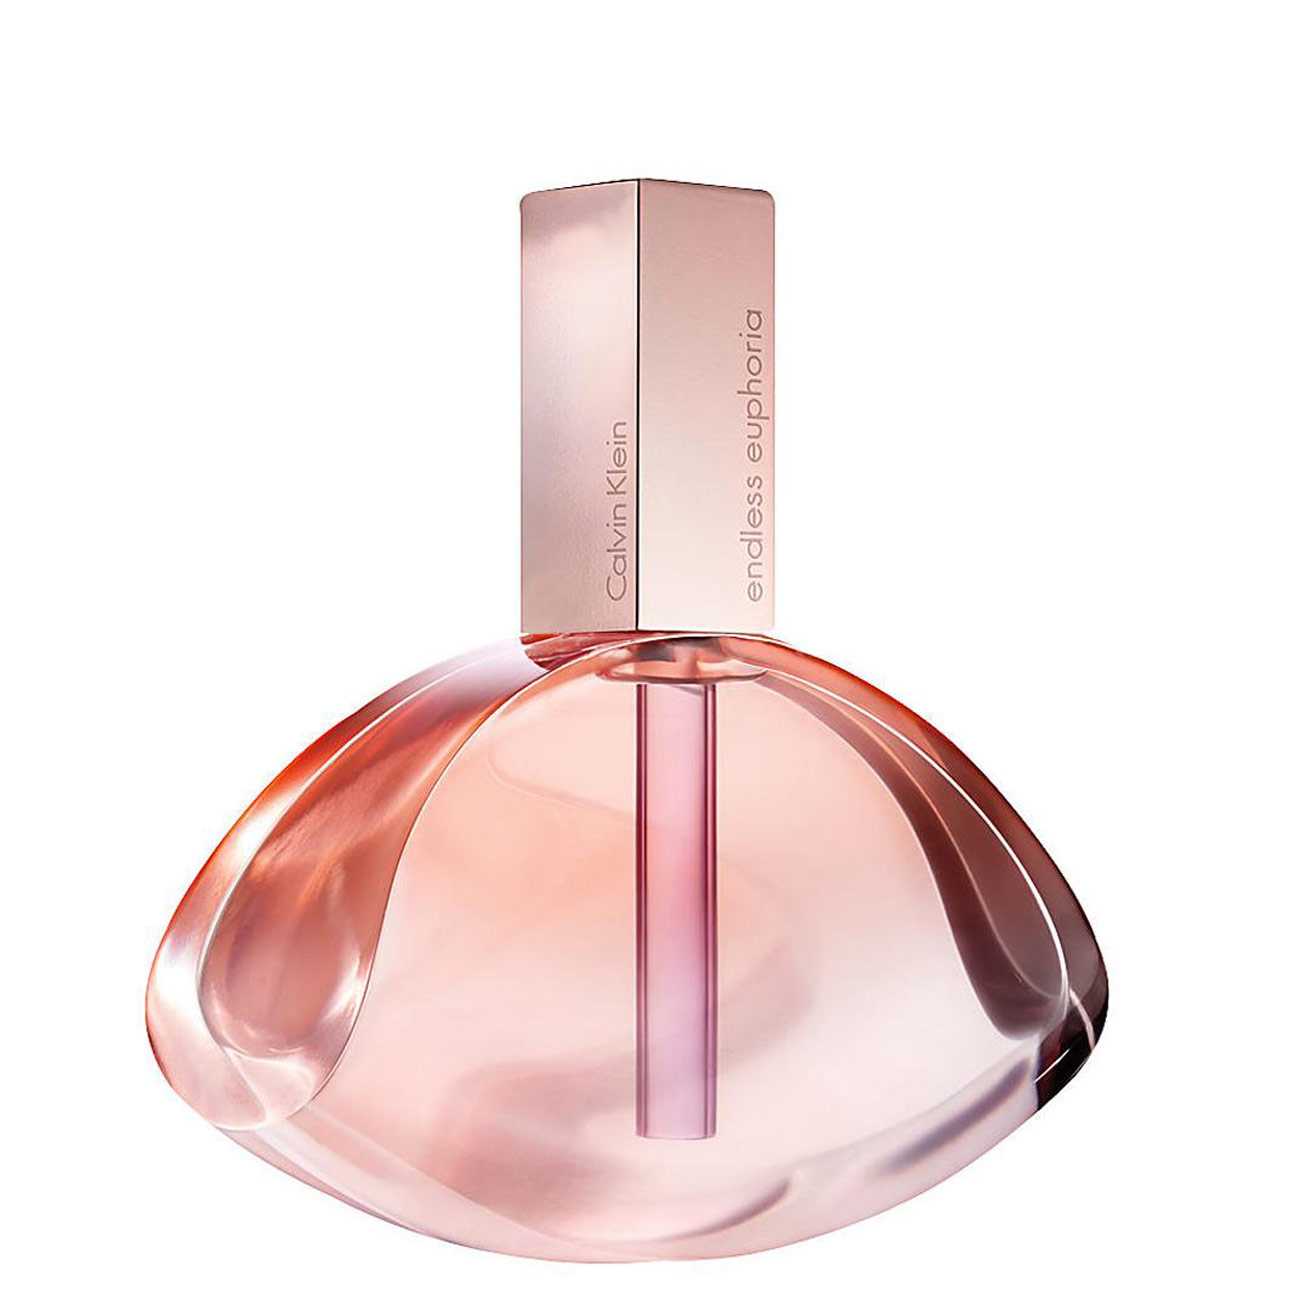 Apa de Parfum Calvin Klein ENDLESS EUPHORIA 125ml cu comanda online